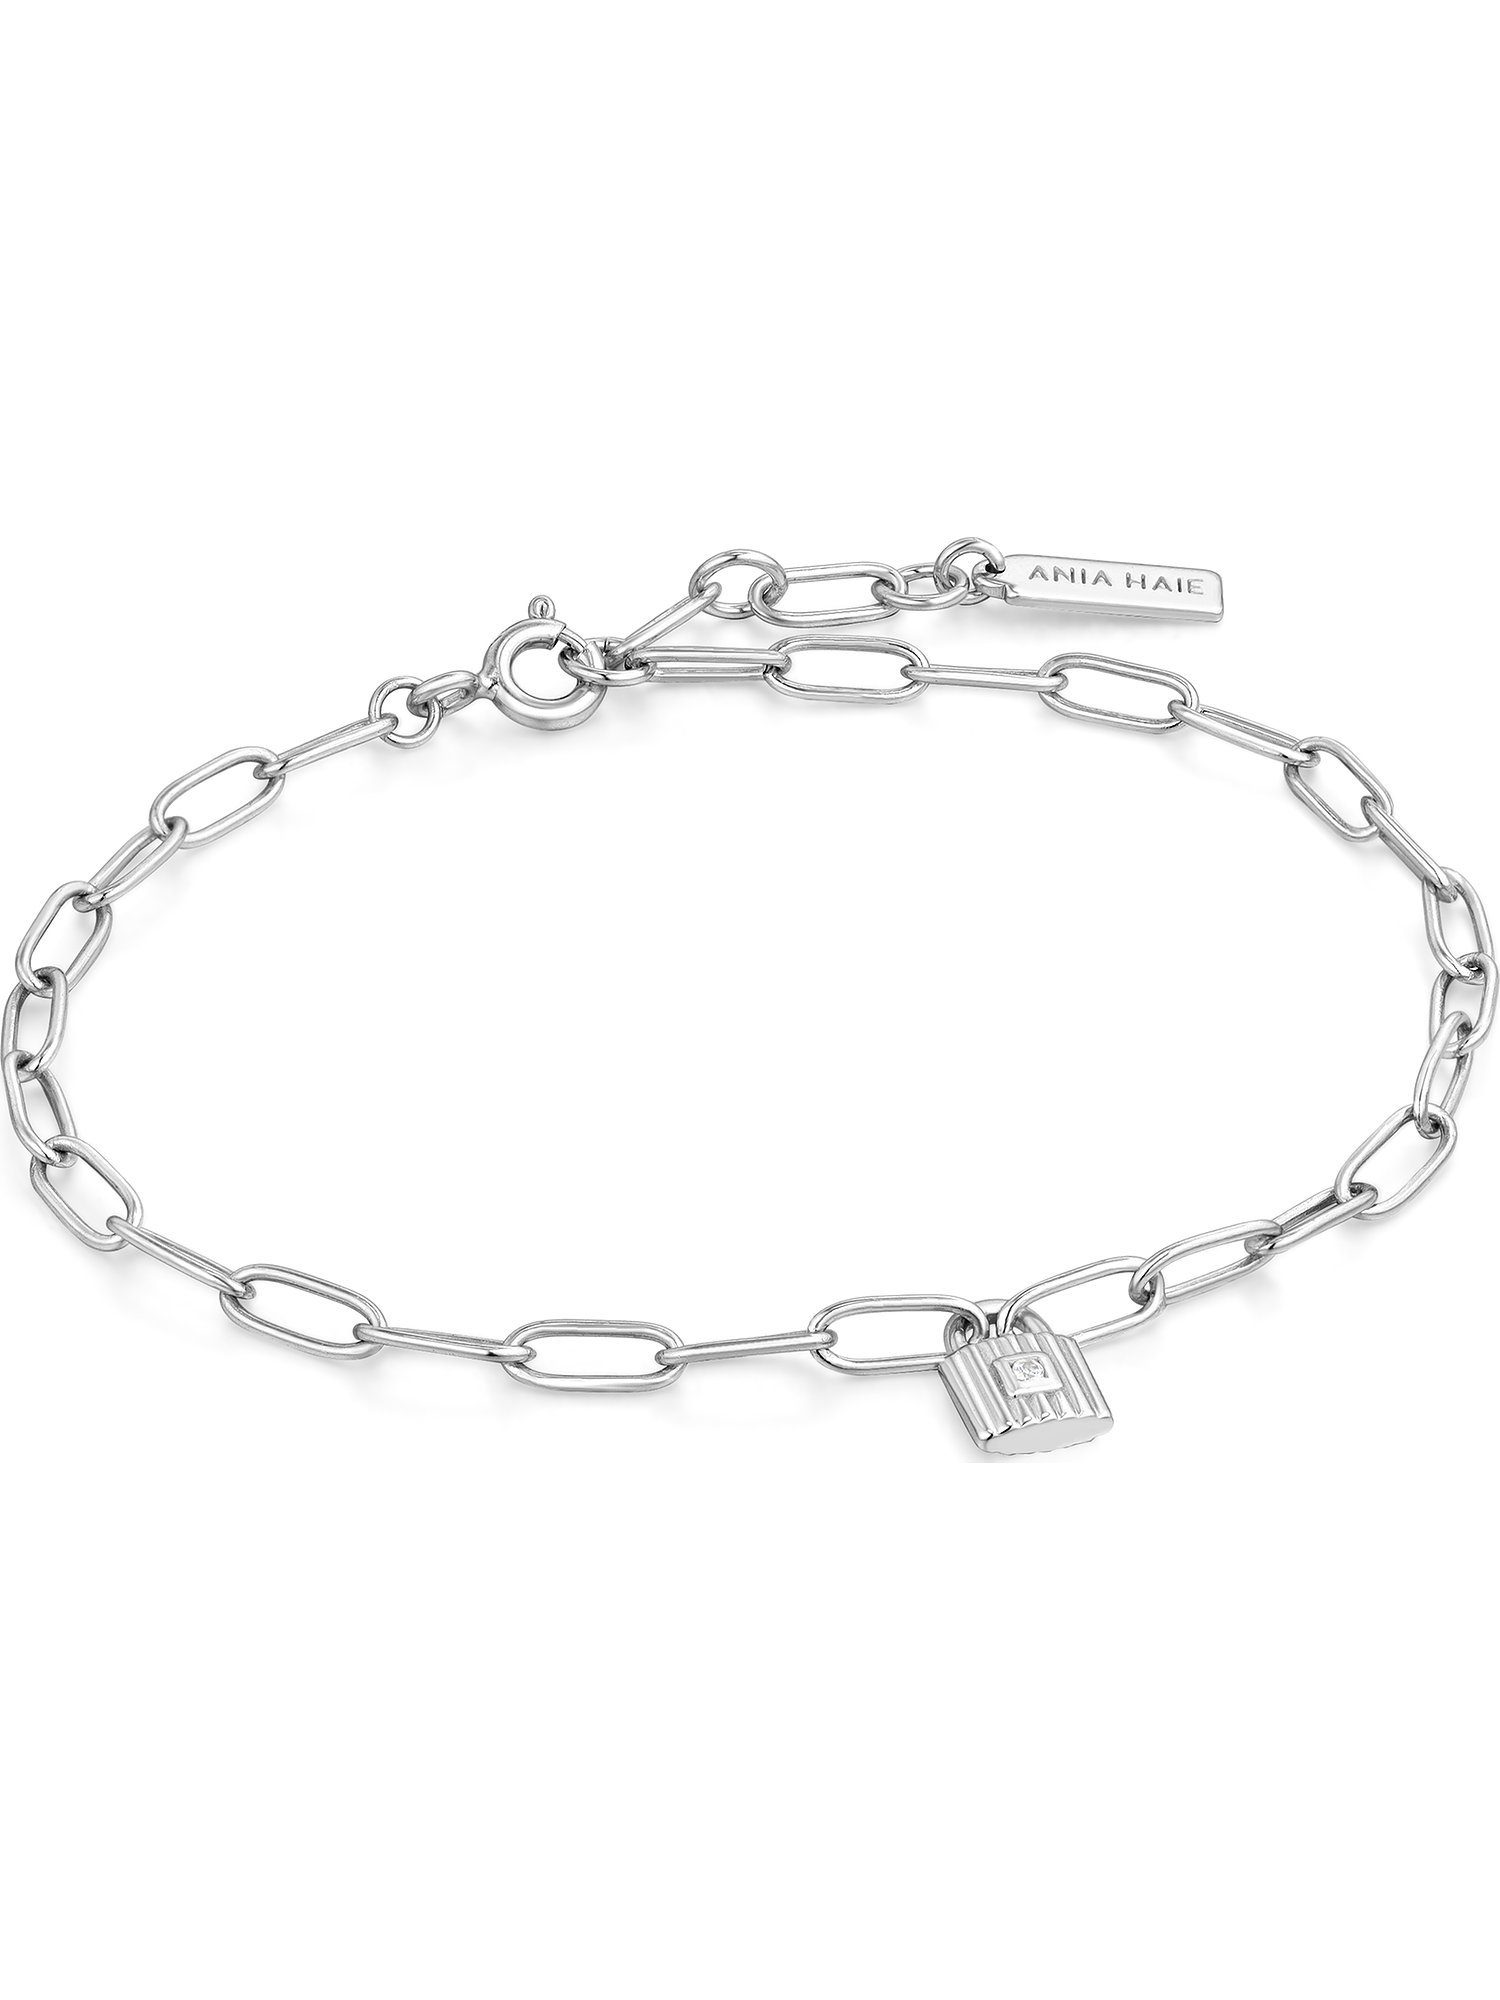 925er Silber Armband Ania Haie Damen-Armband trendig Zirkonia, Ania Haie